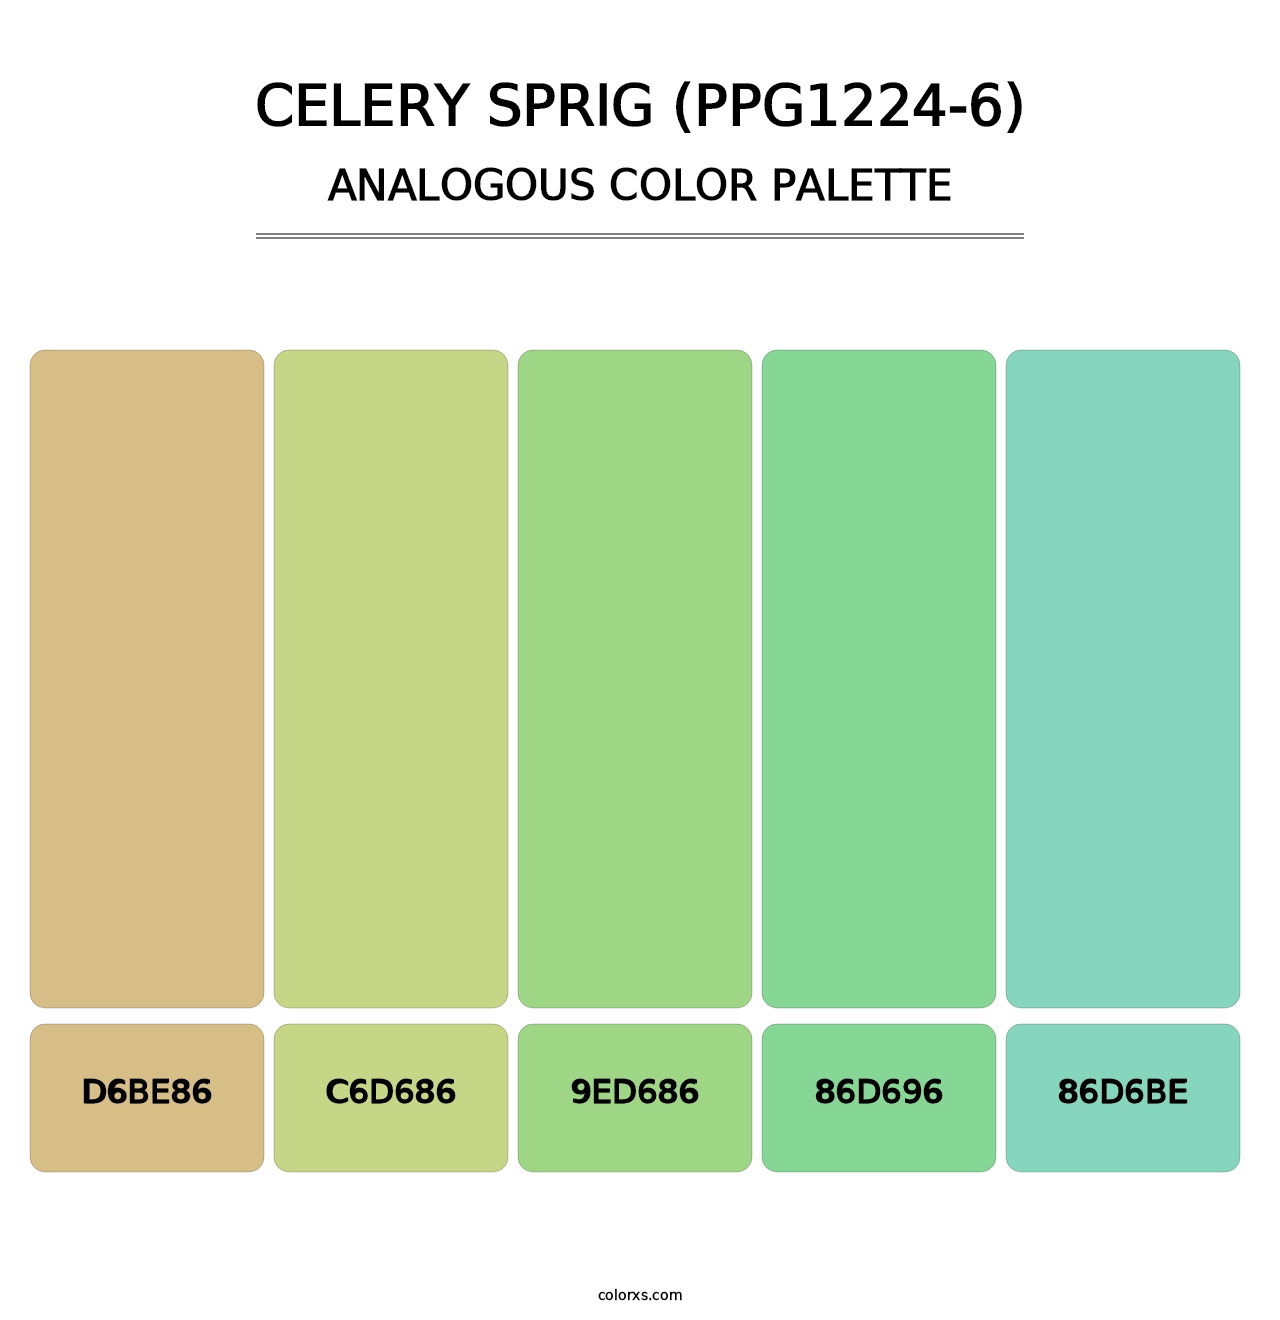 Celery Sprig (PPG1224-6) - Analogous Color Palette